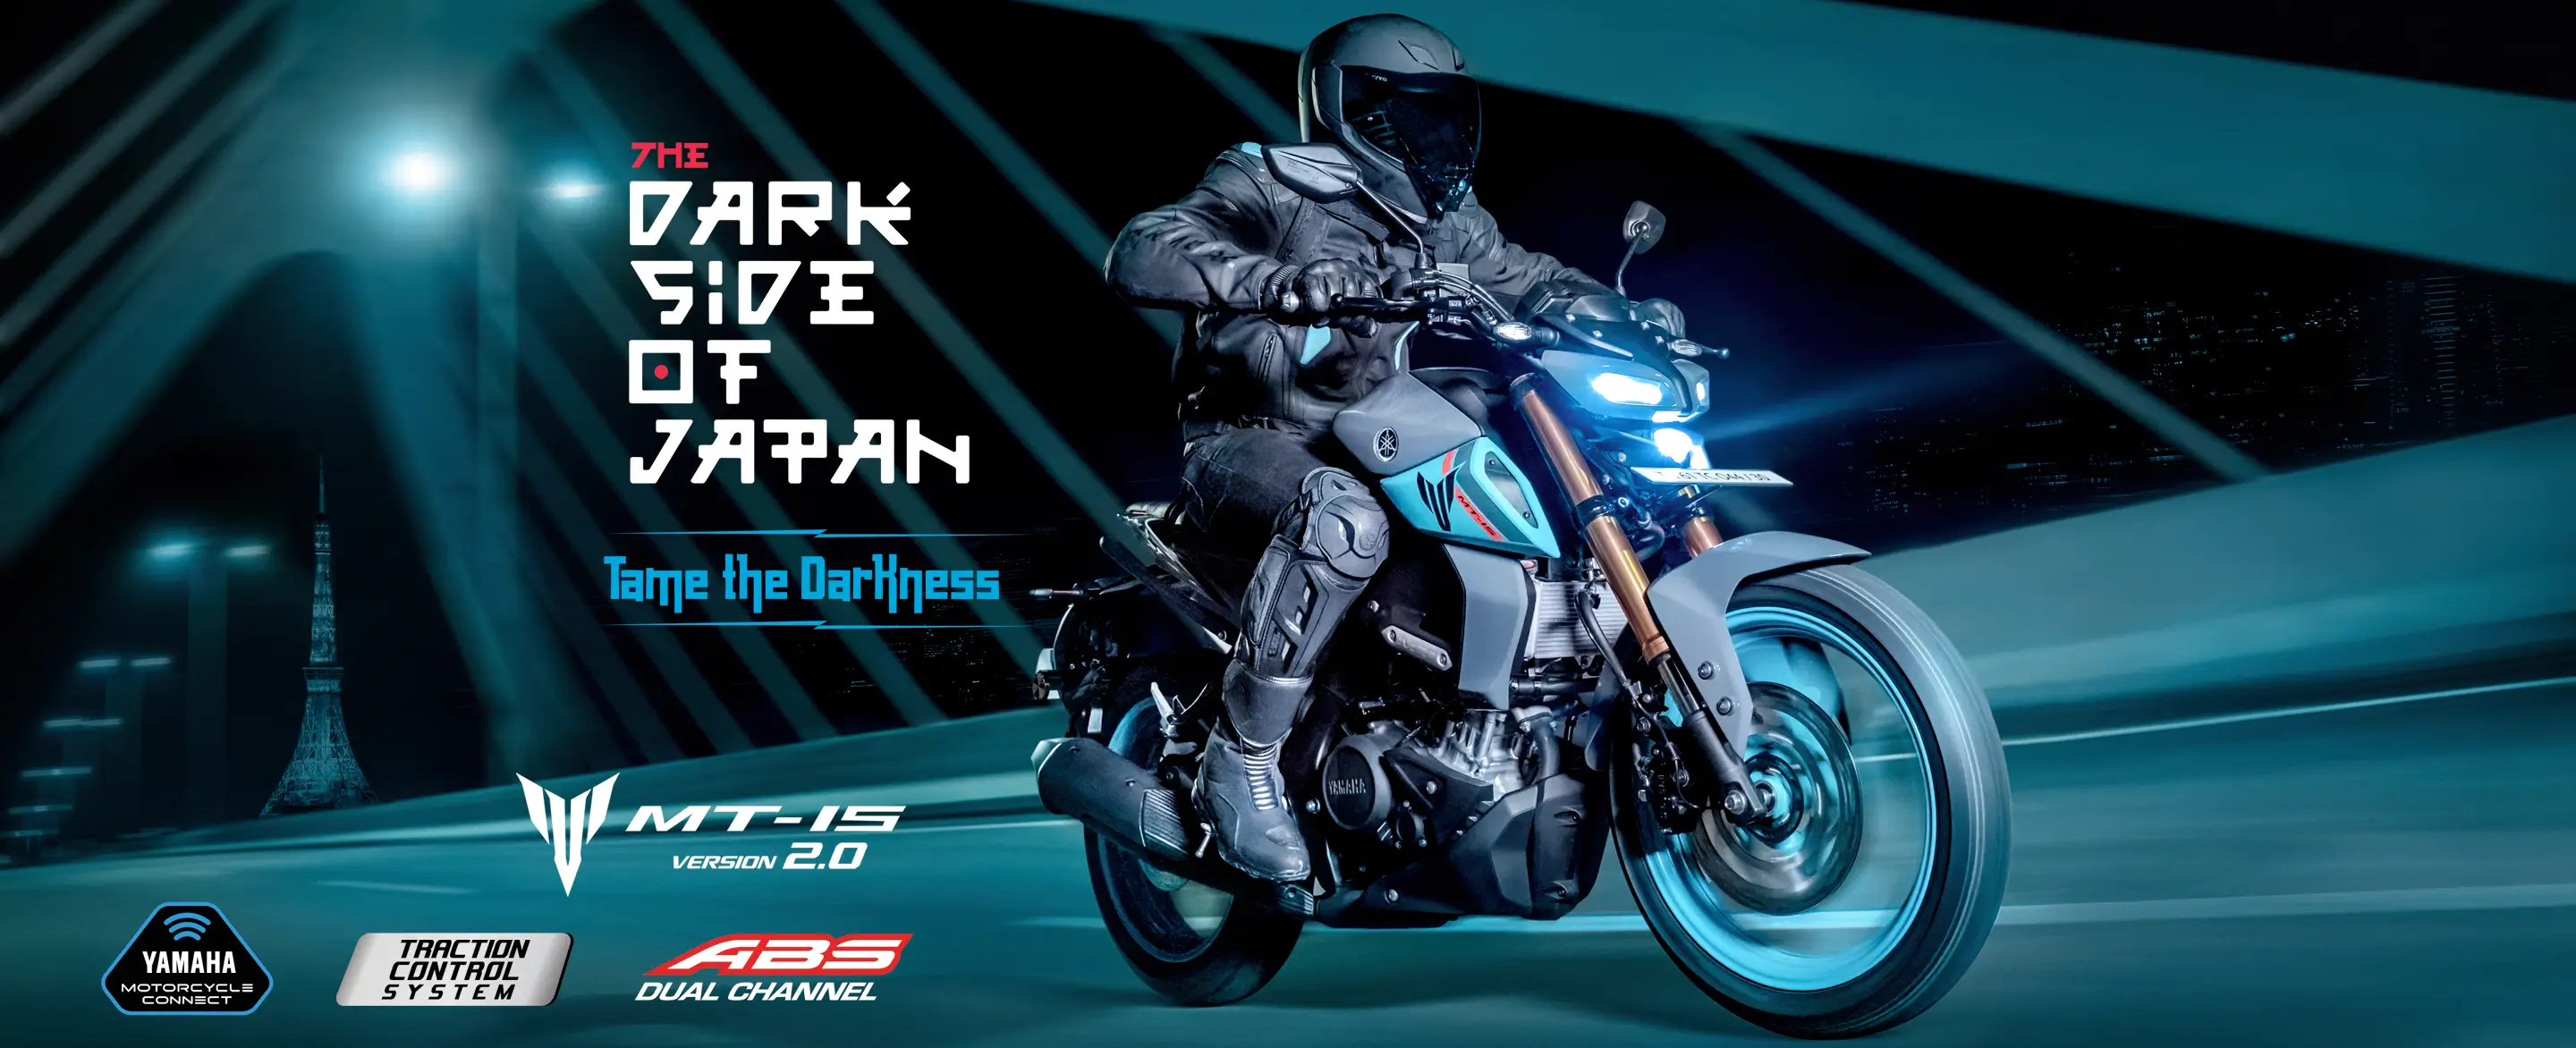 2023 Yamaha Motorcycle Range Launched Starting At Rs 1.27 Lakh - background